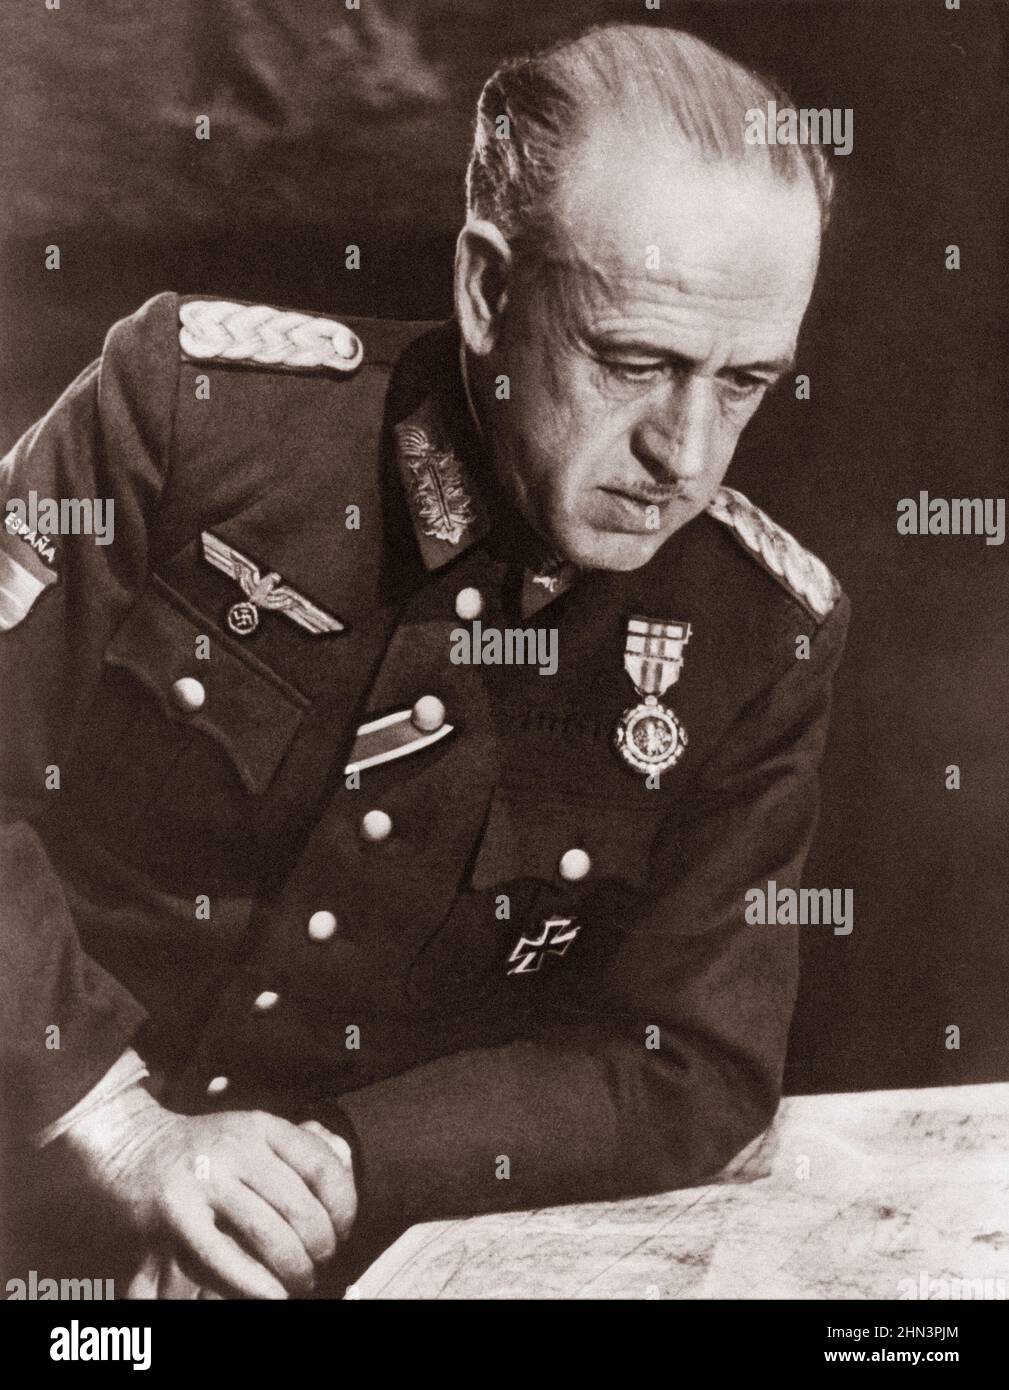 Foto de archivo de Emilio Esteban Infantes. Emilio Esteban Infantes Martín (1892 – 1962) fue un oficial español que sirvió durante la Guerra Civil Española Foto de stock